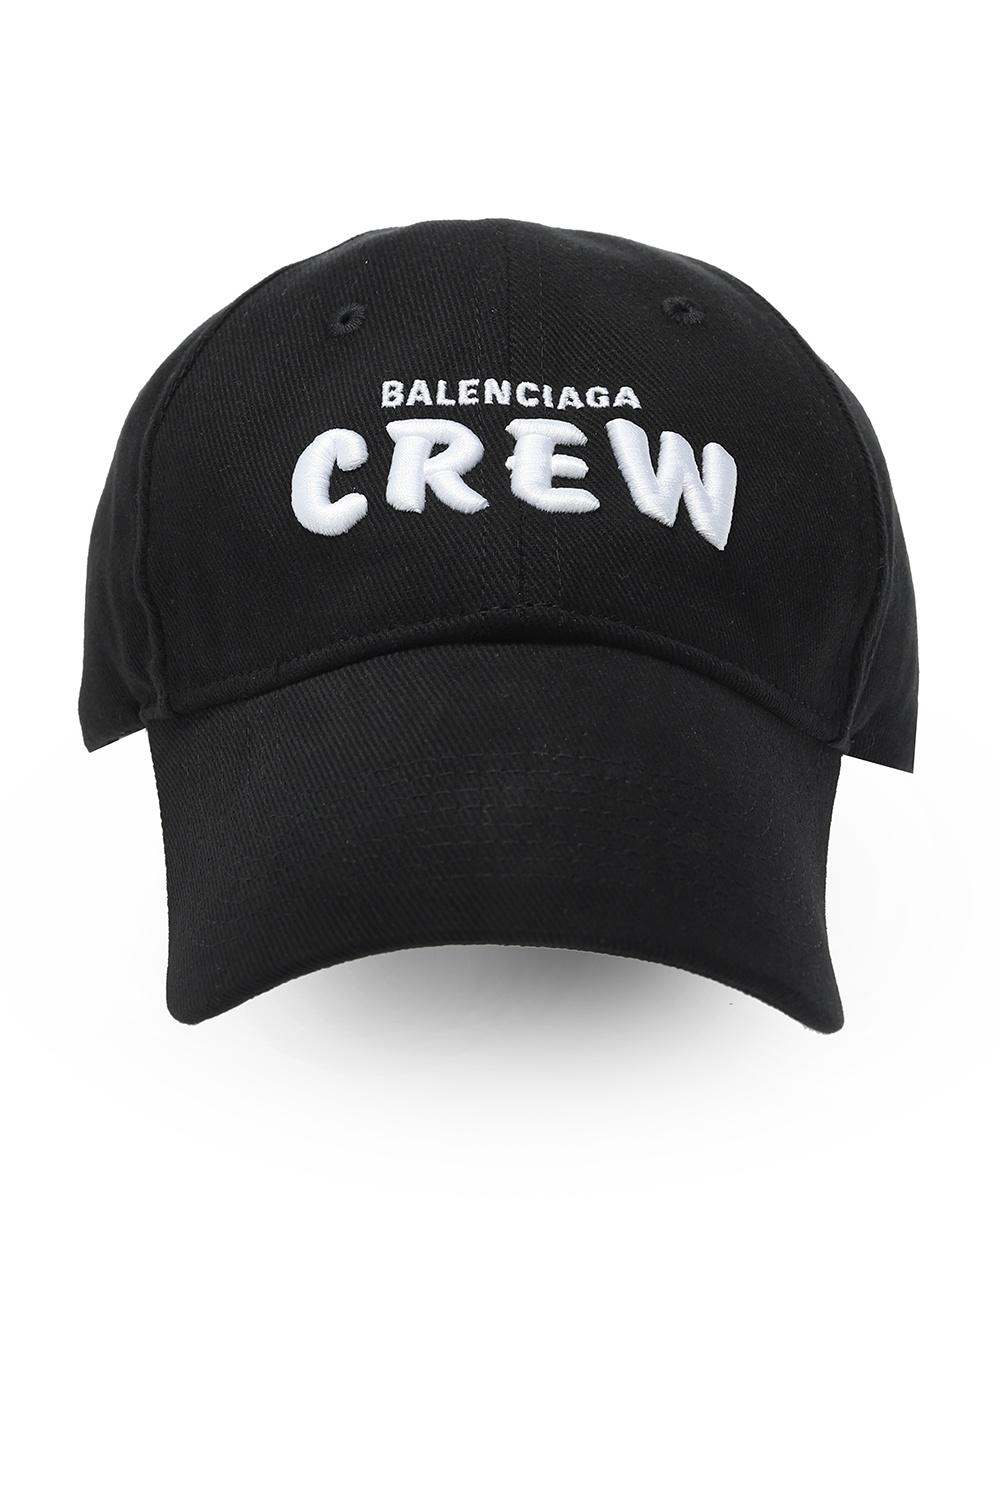 Balenciaga Crew Cap in Black | Lyst